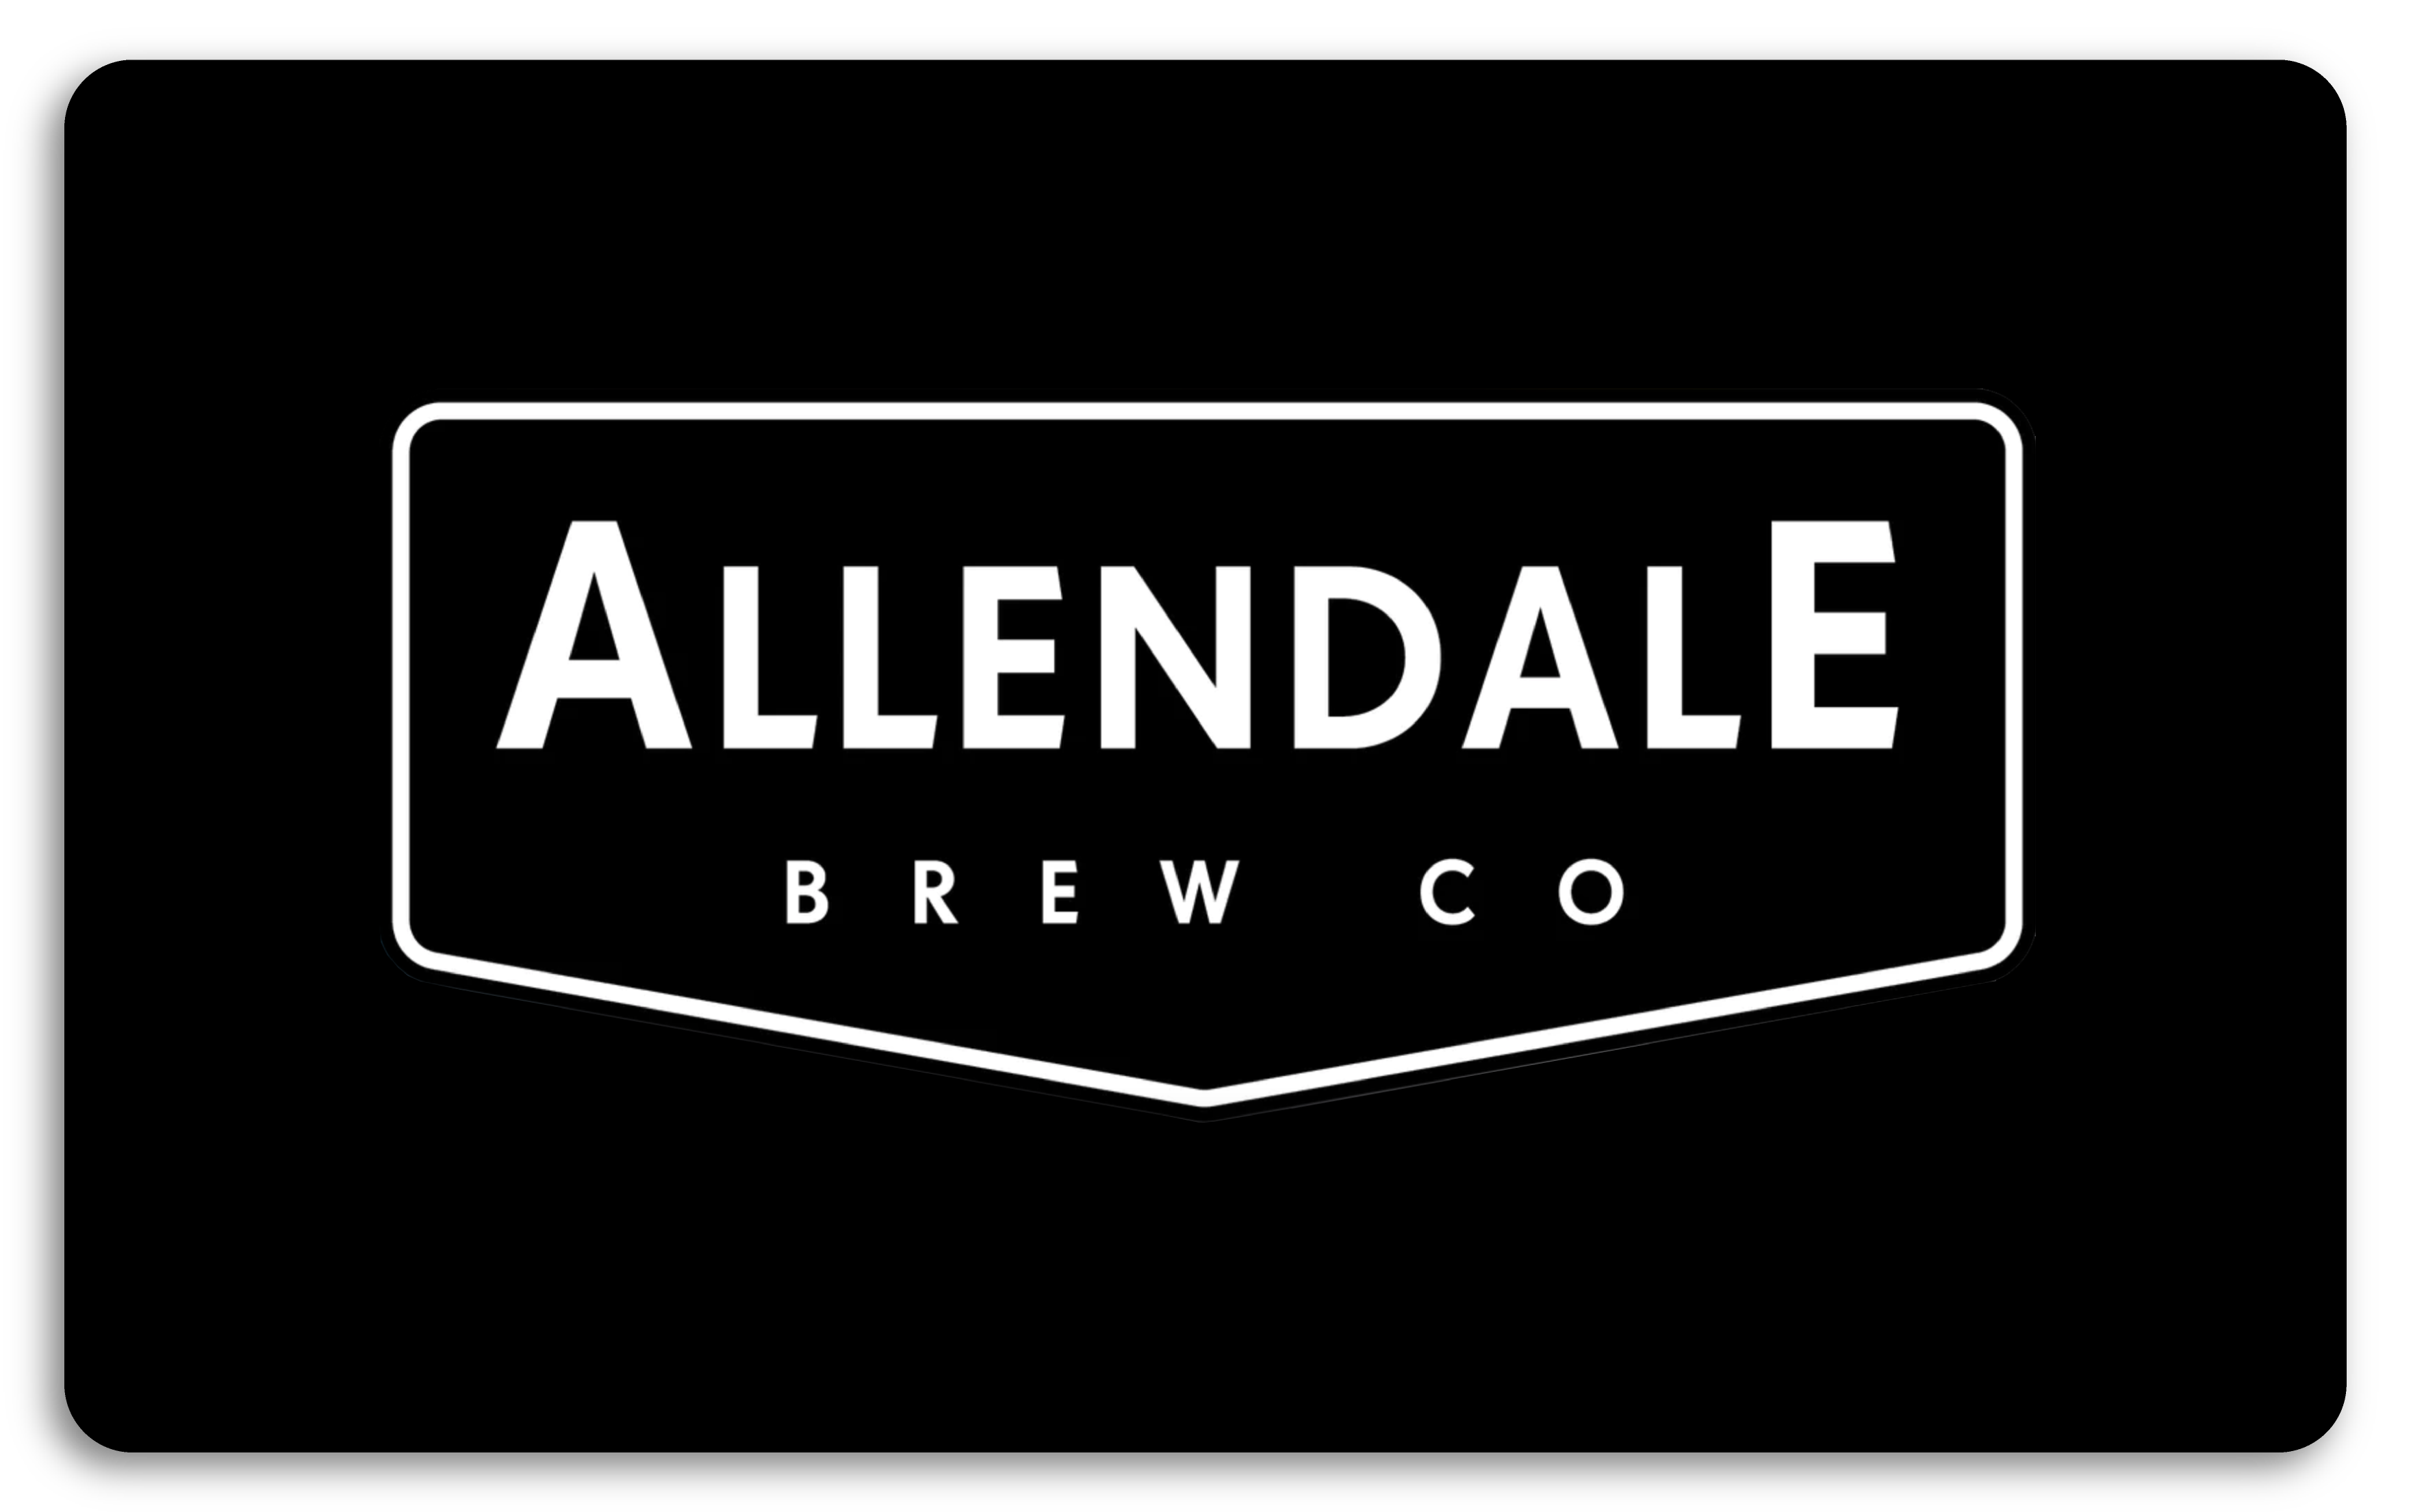 Allendale Brew Co.